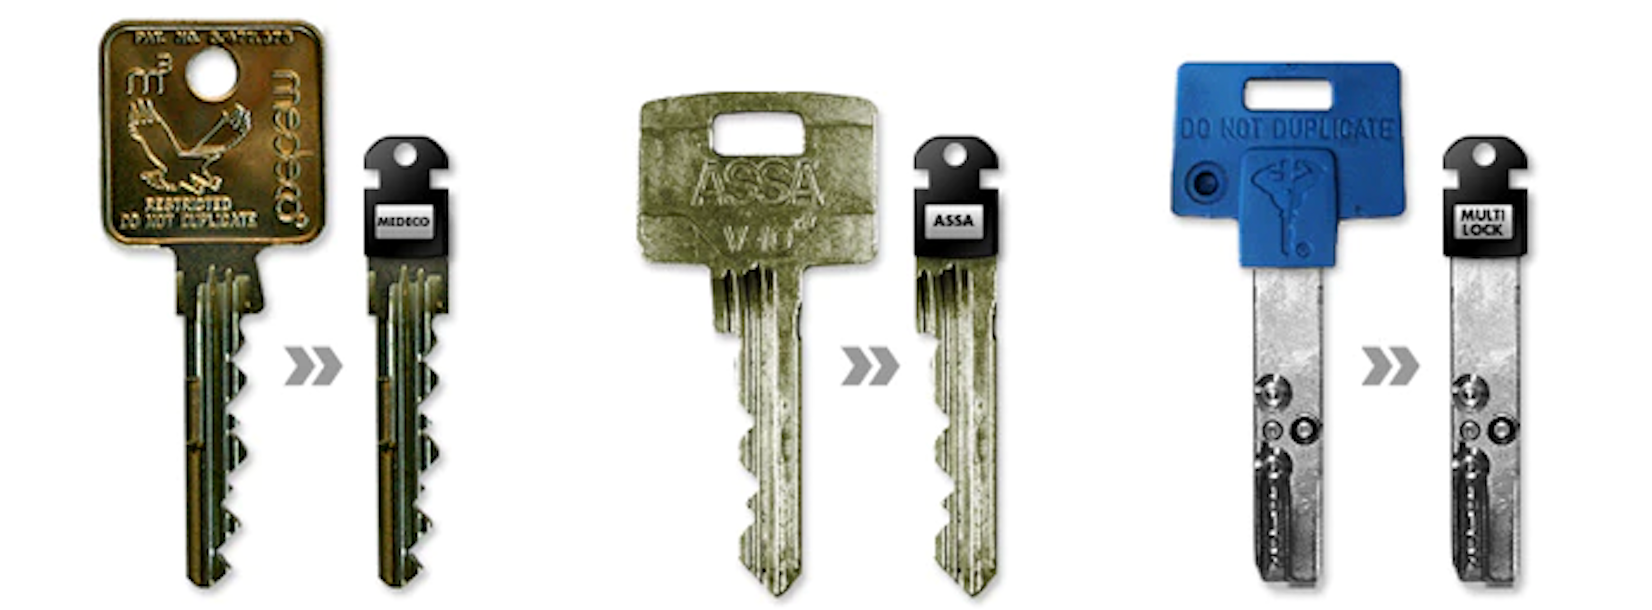 High-Security keys converted to Keyport Blades